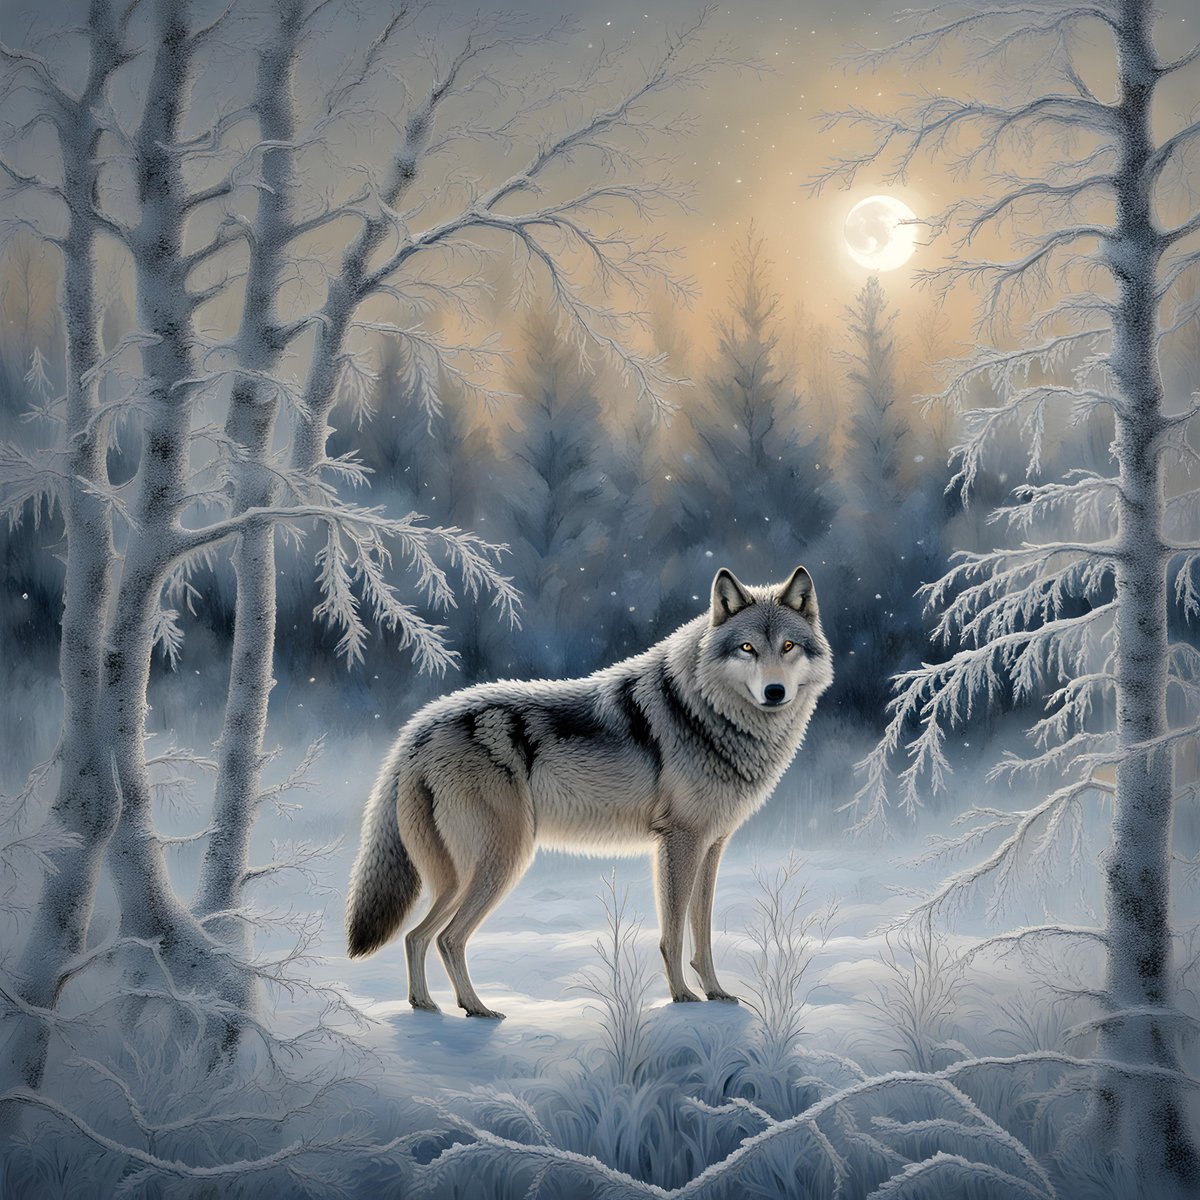 Canis Lupus Guardian of the Silent Snow #wolf #CanisLupus #moonlight #winter #winterscene #animal #snow #snowscene #aiart #ai #digitalart #art #artificialintelligence #aigenerated #generativeai #machinelearning #aiartwork